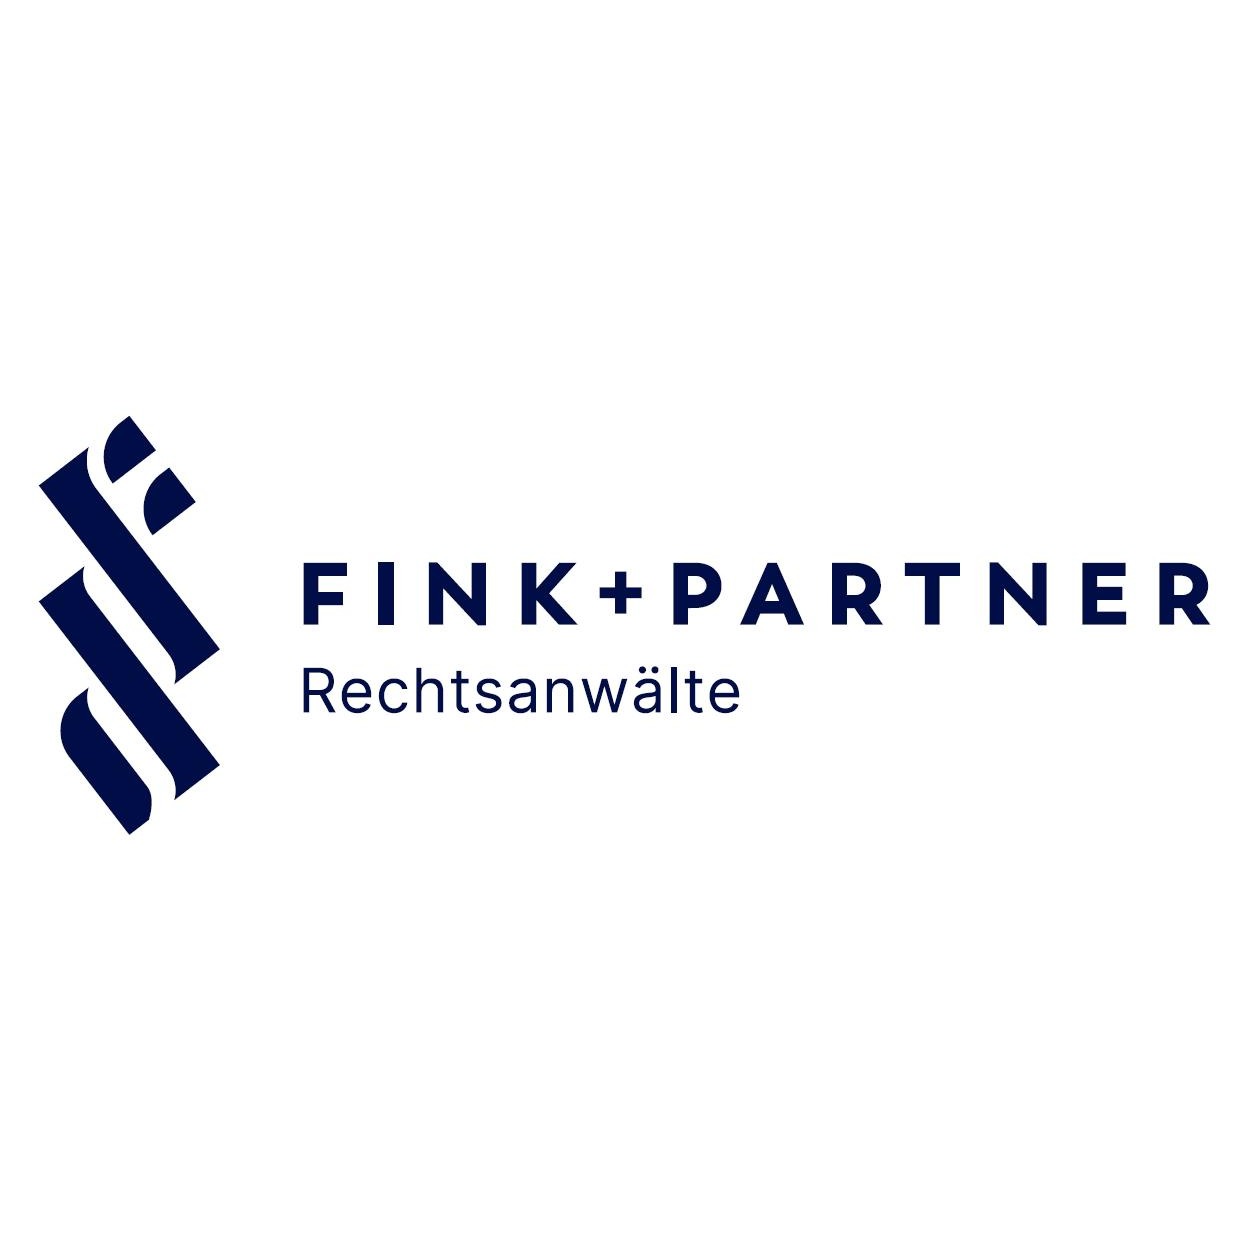 Fink+Partner Rechtsanwälte 9020